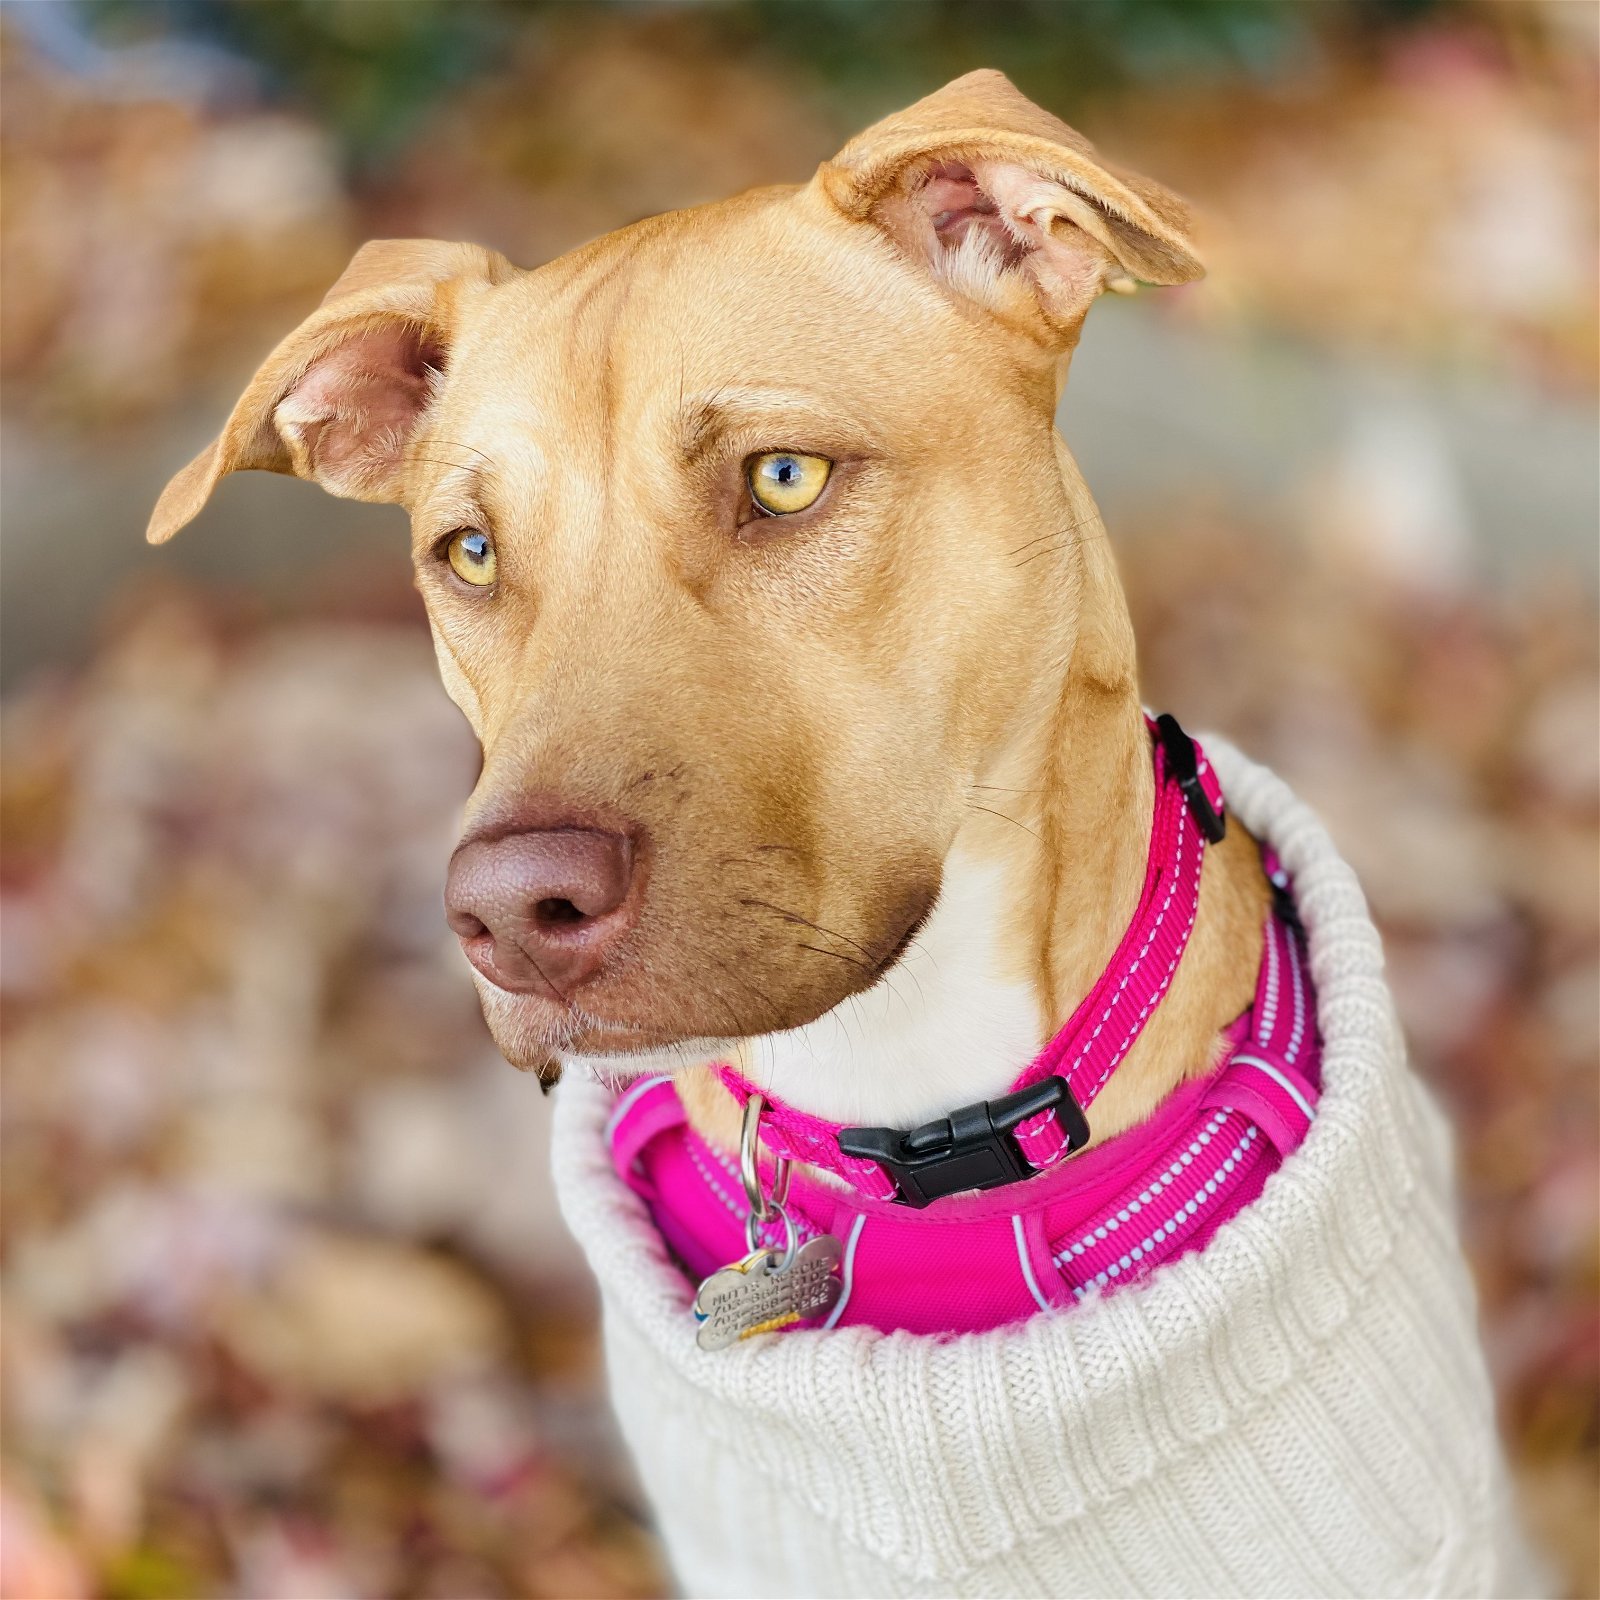 Marigold *Adopt*, an adoptable Pit Bull Terrier in Fairfax, VA, 22038 | Photo Image 1